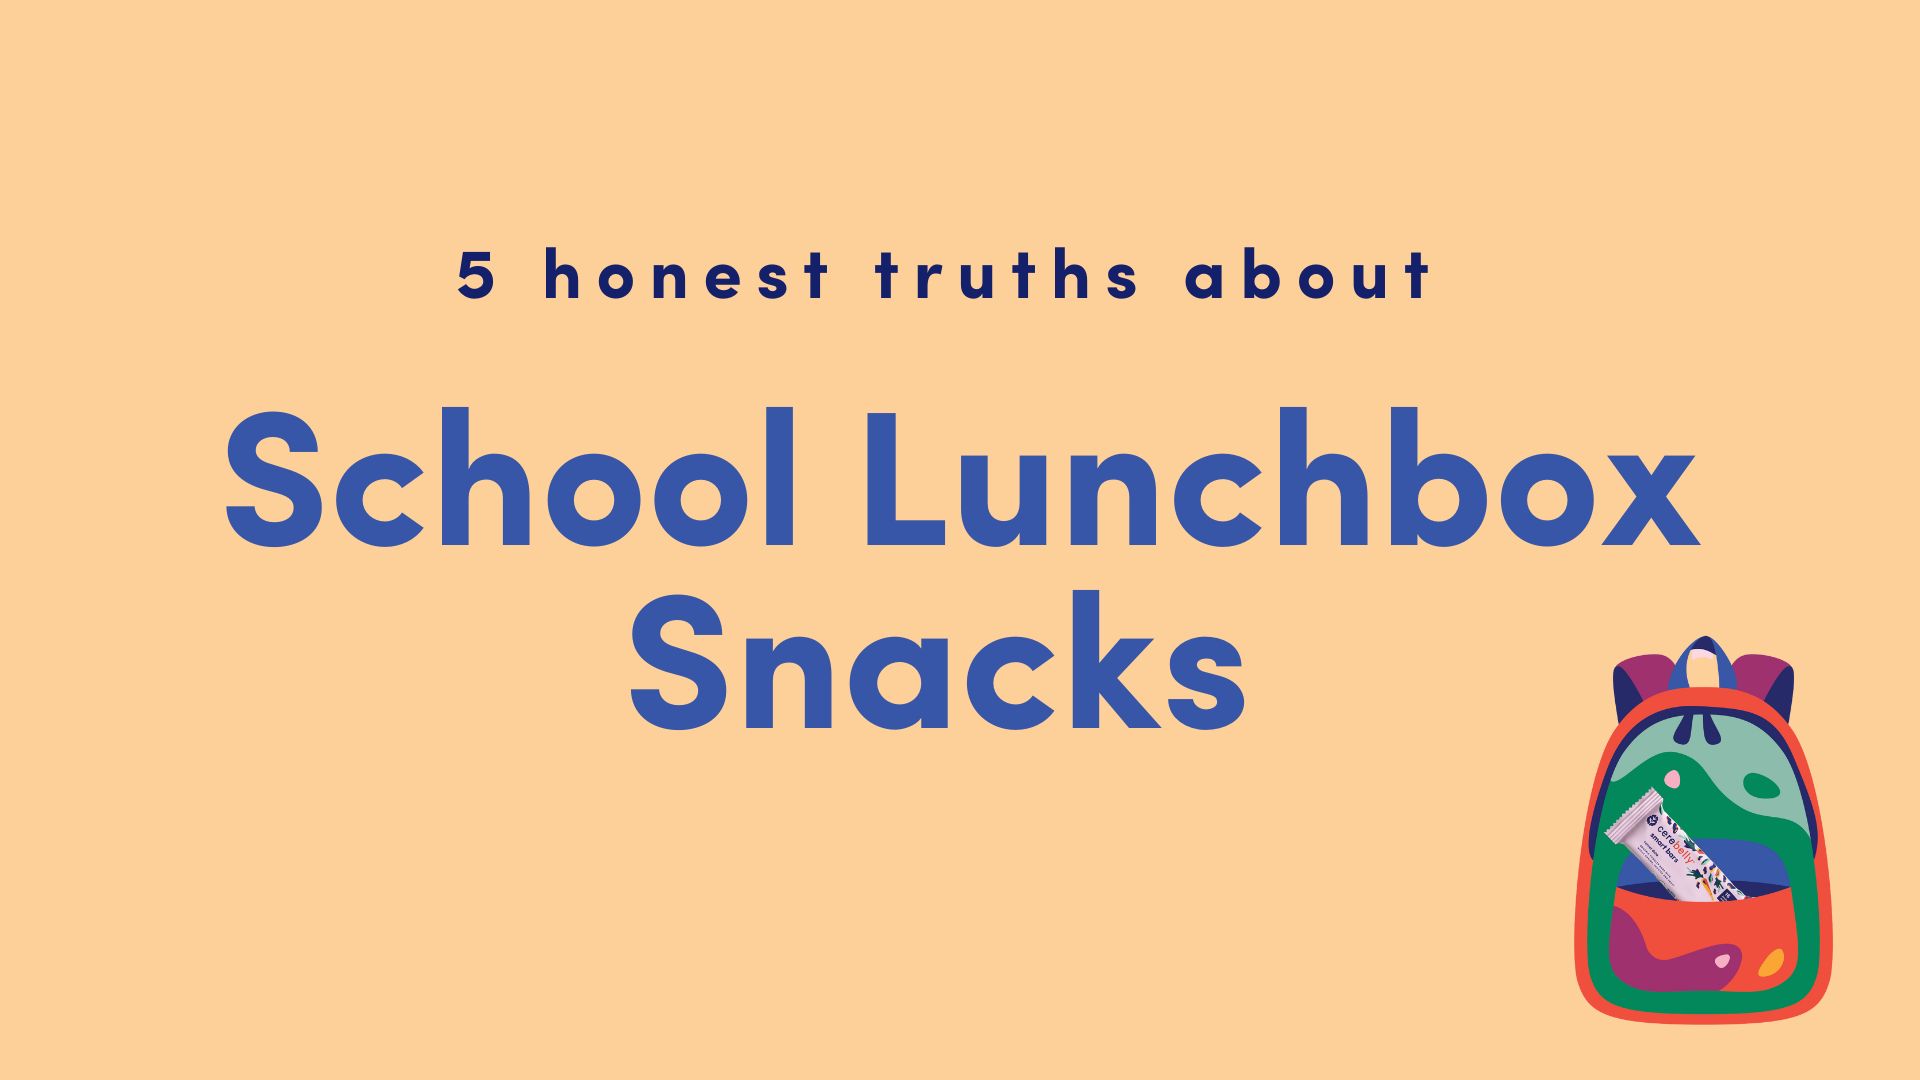 School Lunchbox Snacks